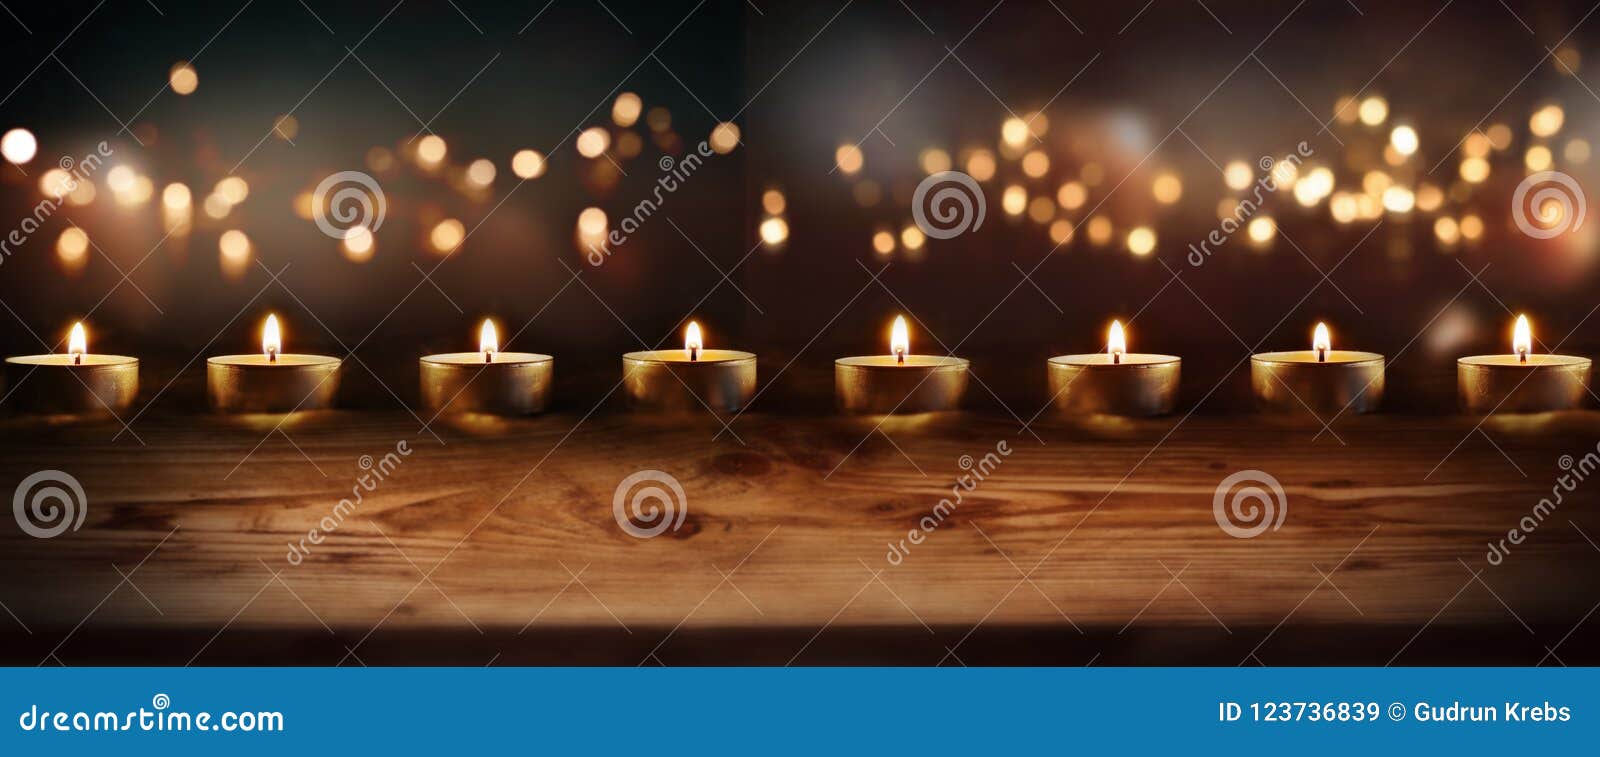 burning candles with celebratory bokeh